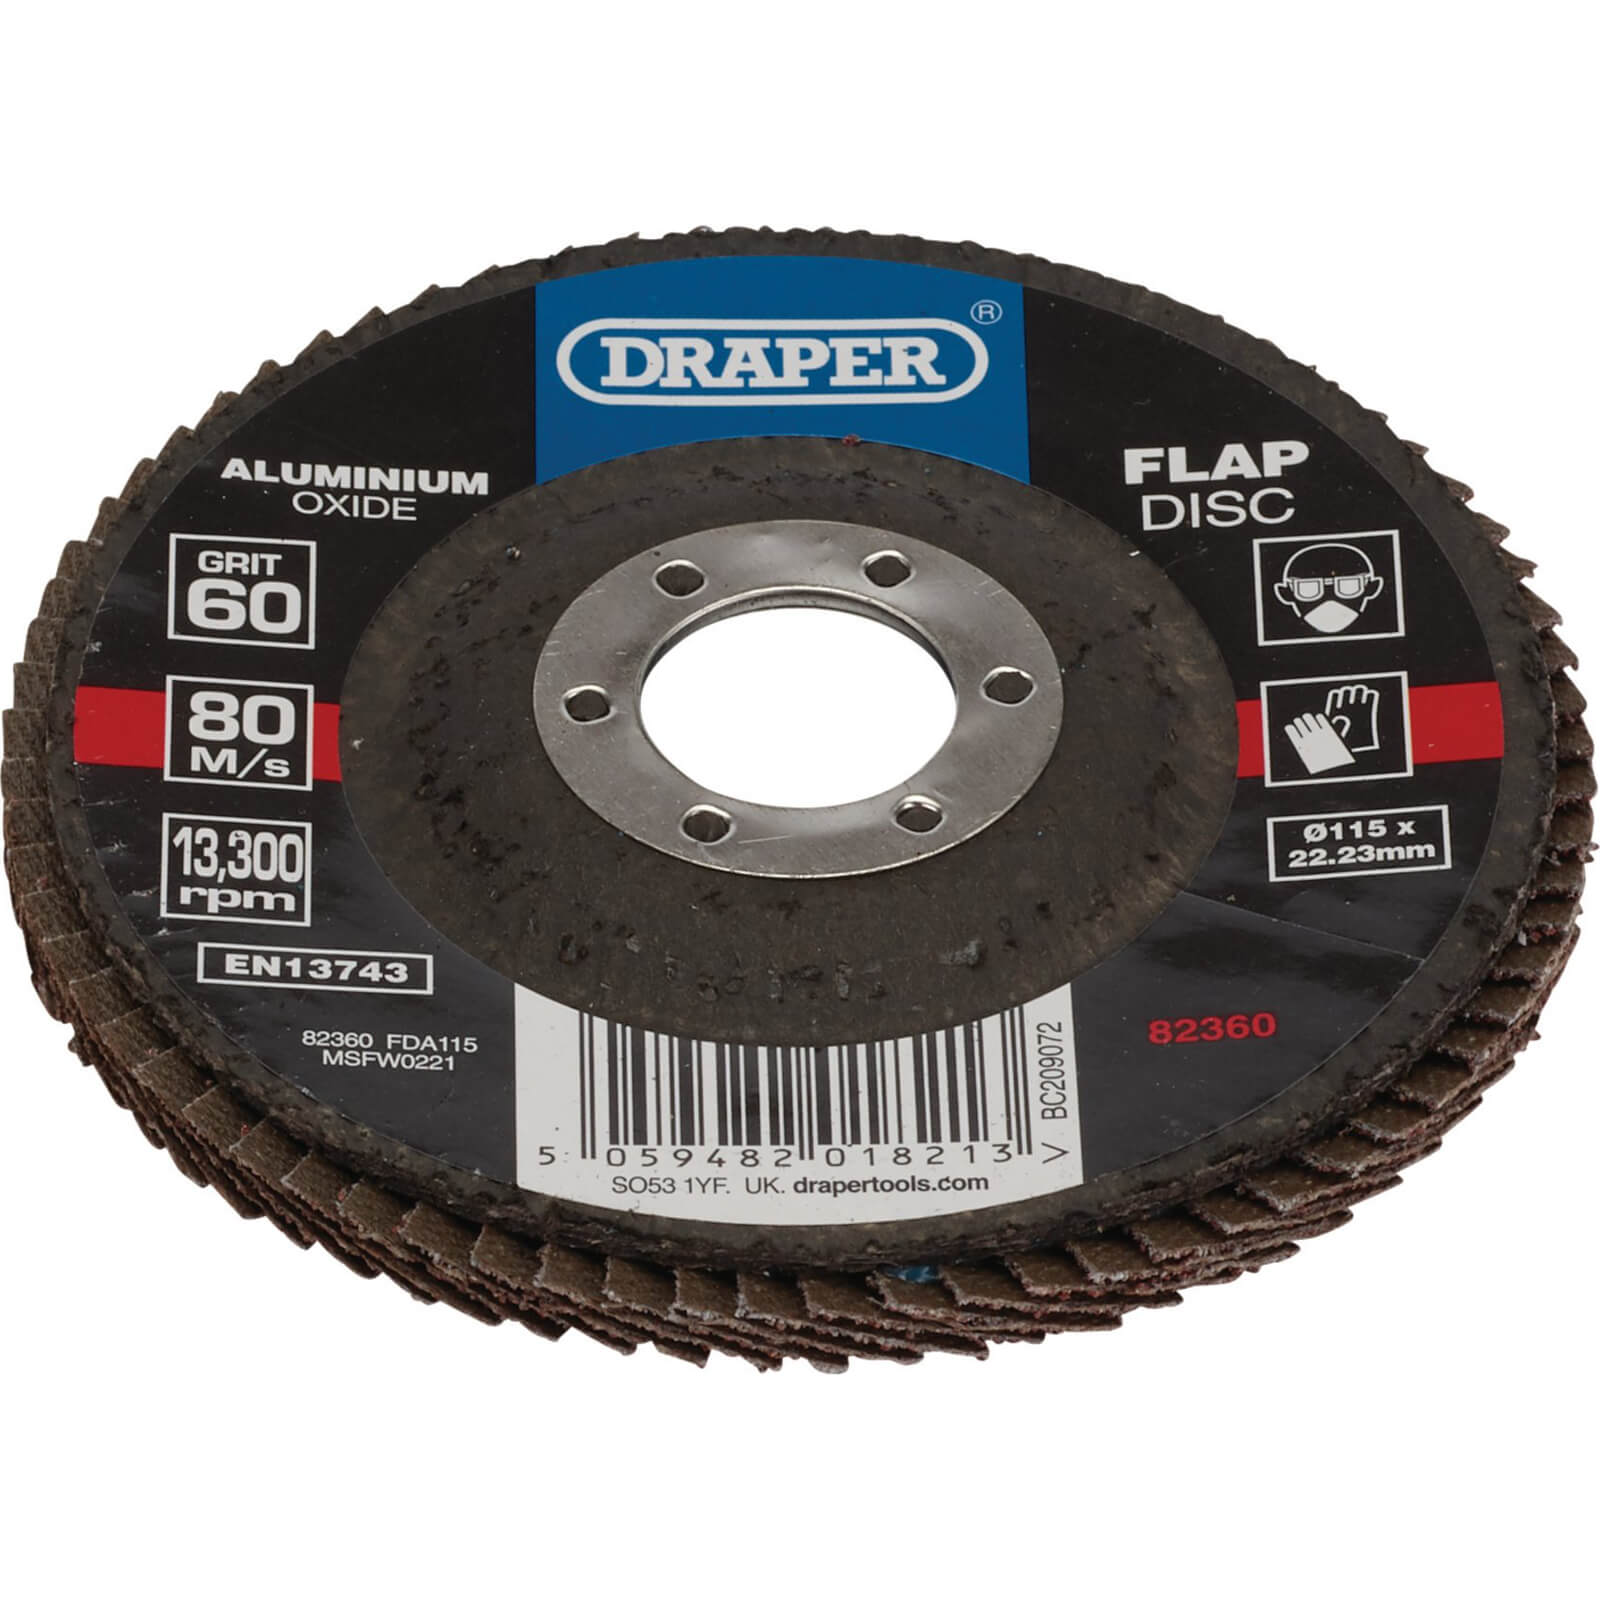 Image of Draper Aluminium Oxide Flap Discs 115mm 60g Pack of 1